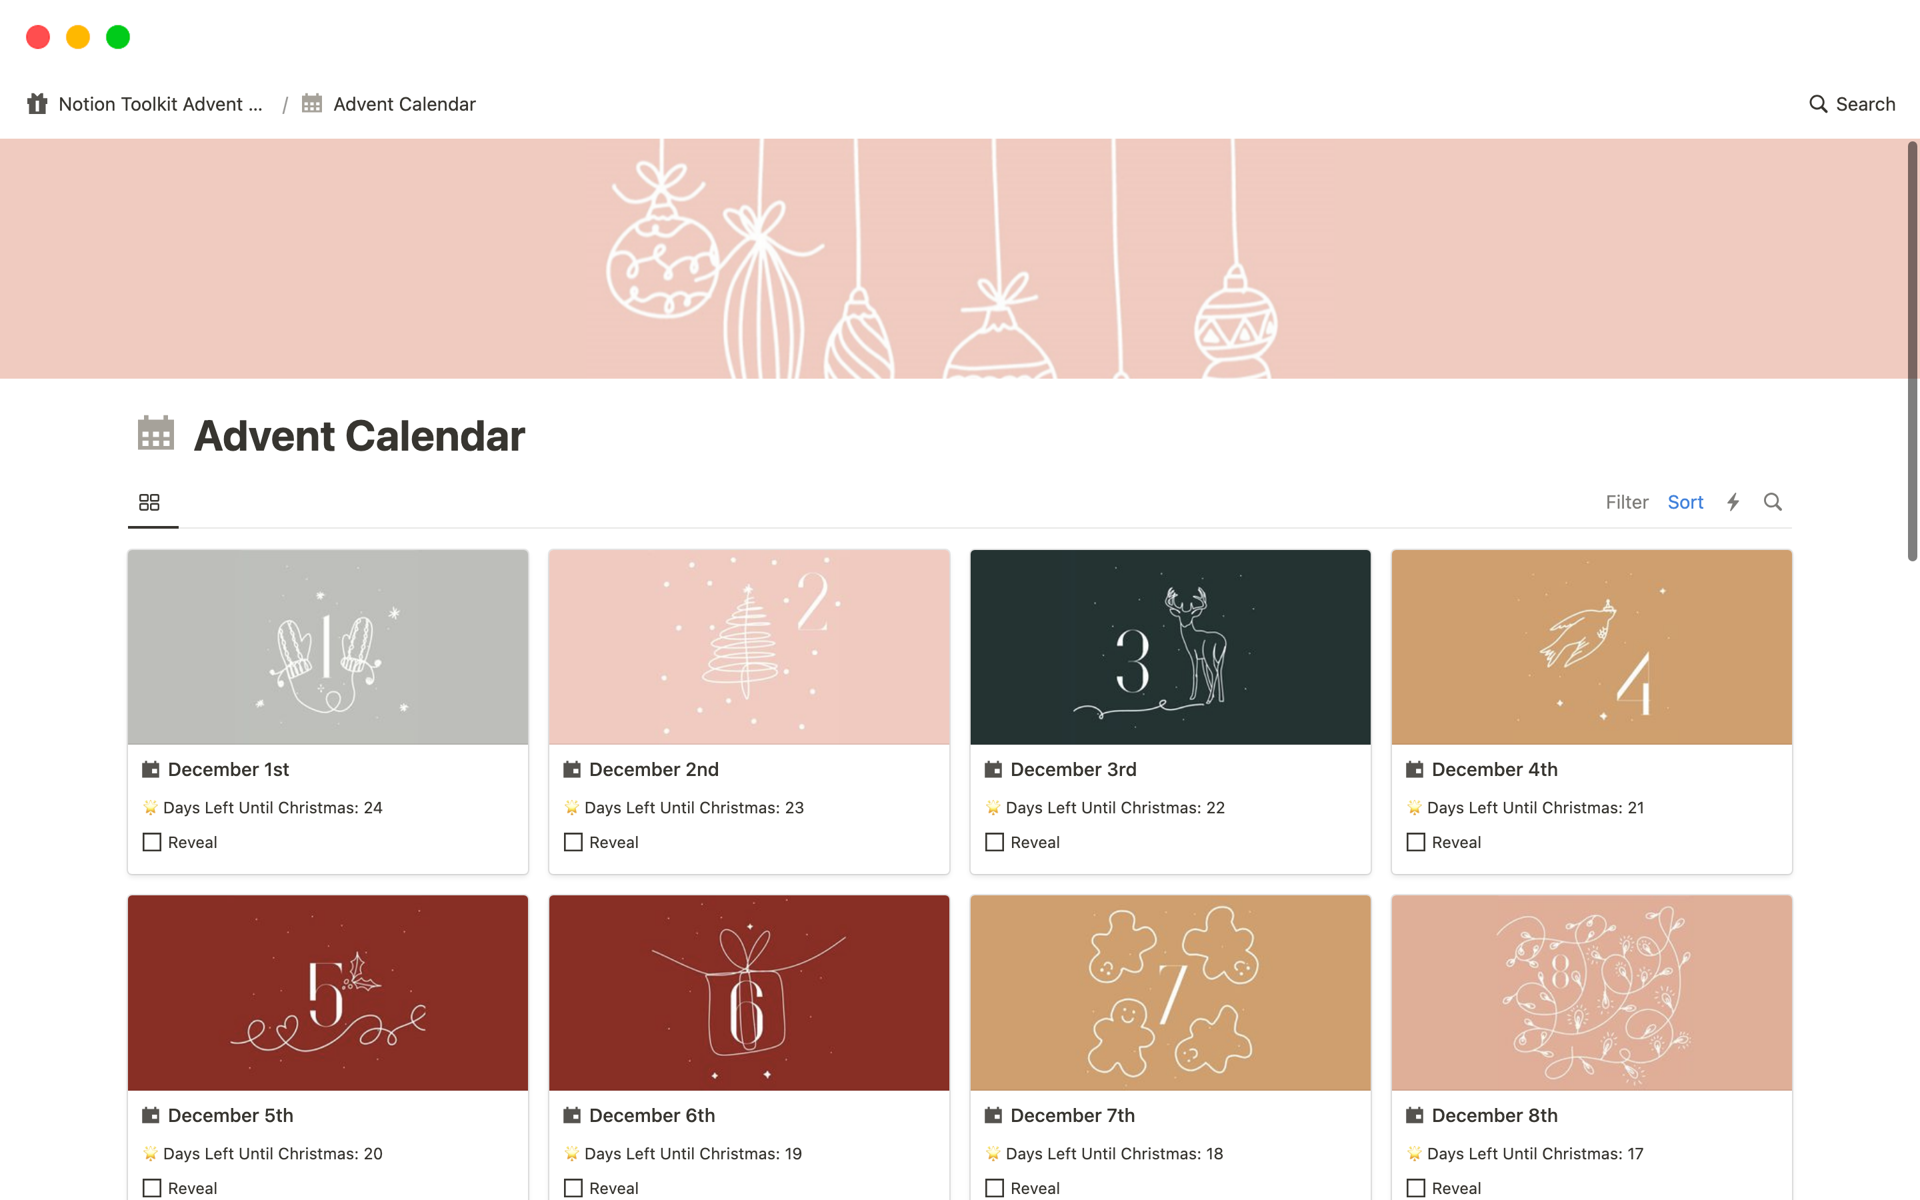 En forhåndsvisning av mal for Notion Toolkit Advent Calendar